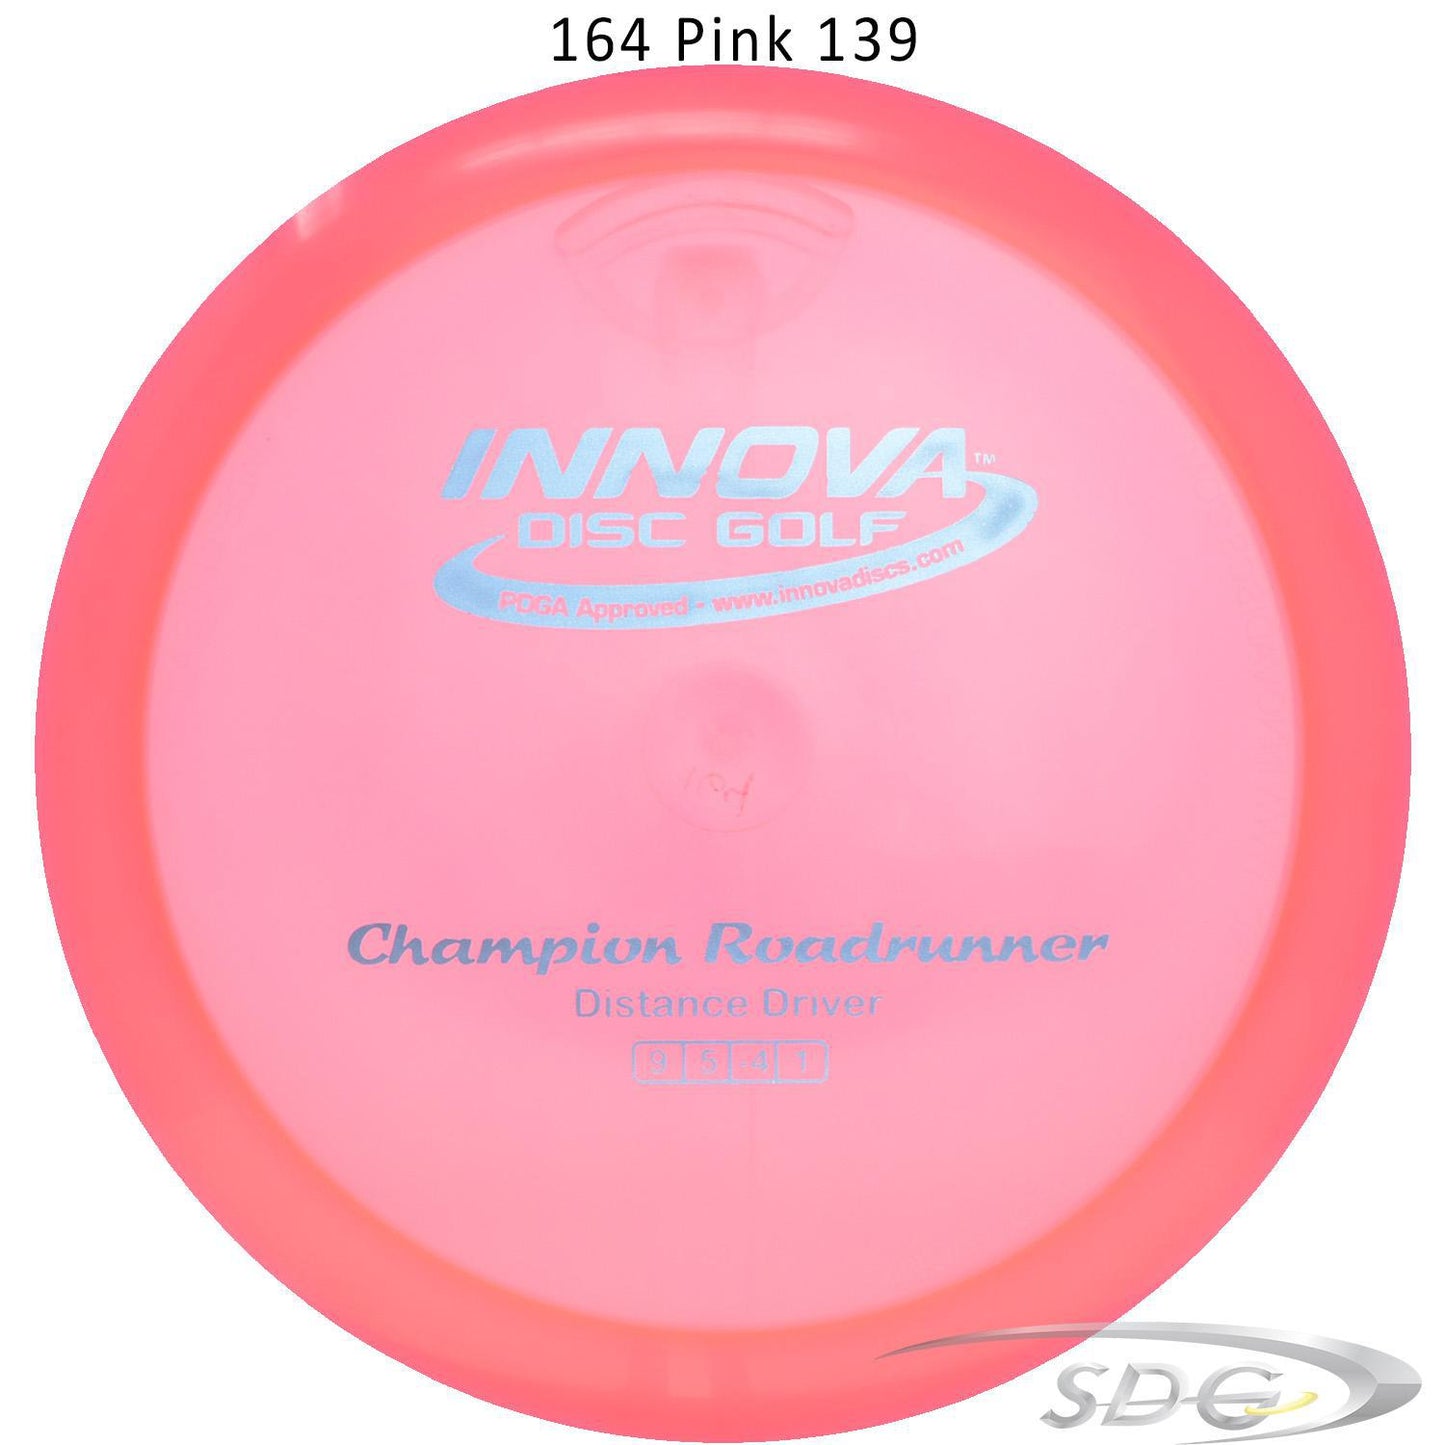 innova-champion-roadrunner-disc-golf-distance-driver 164 Pink 139 